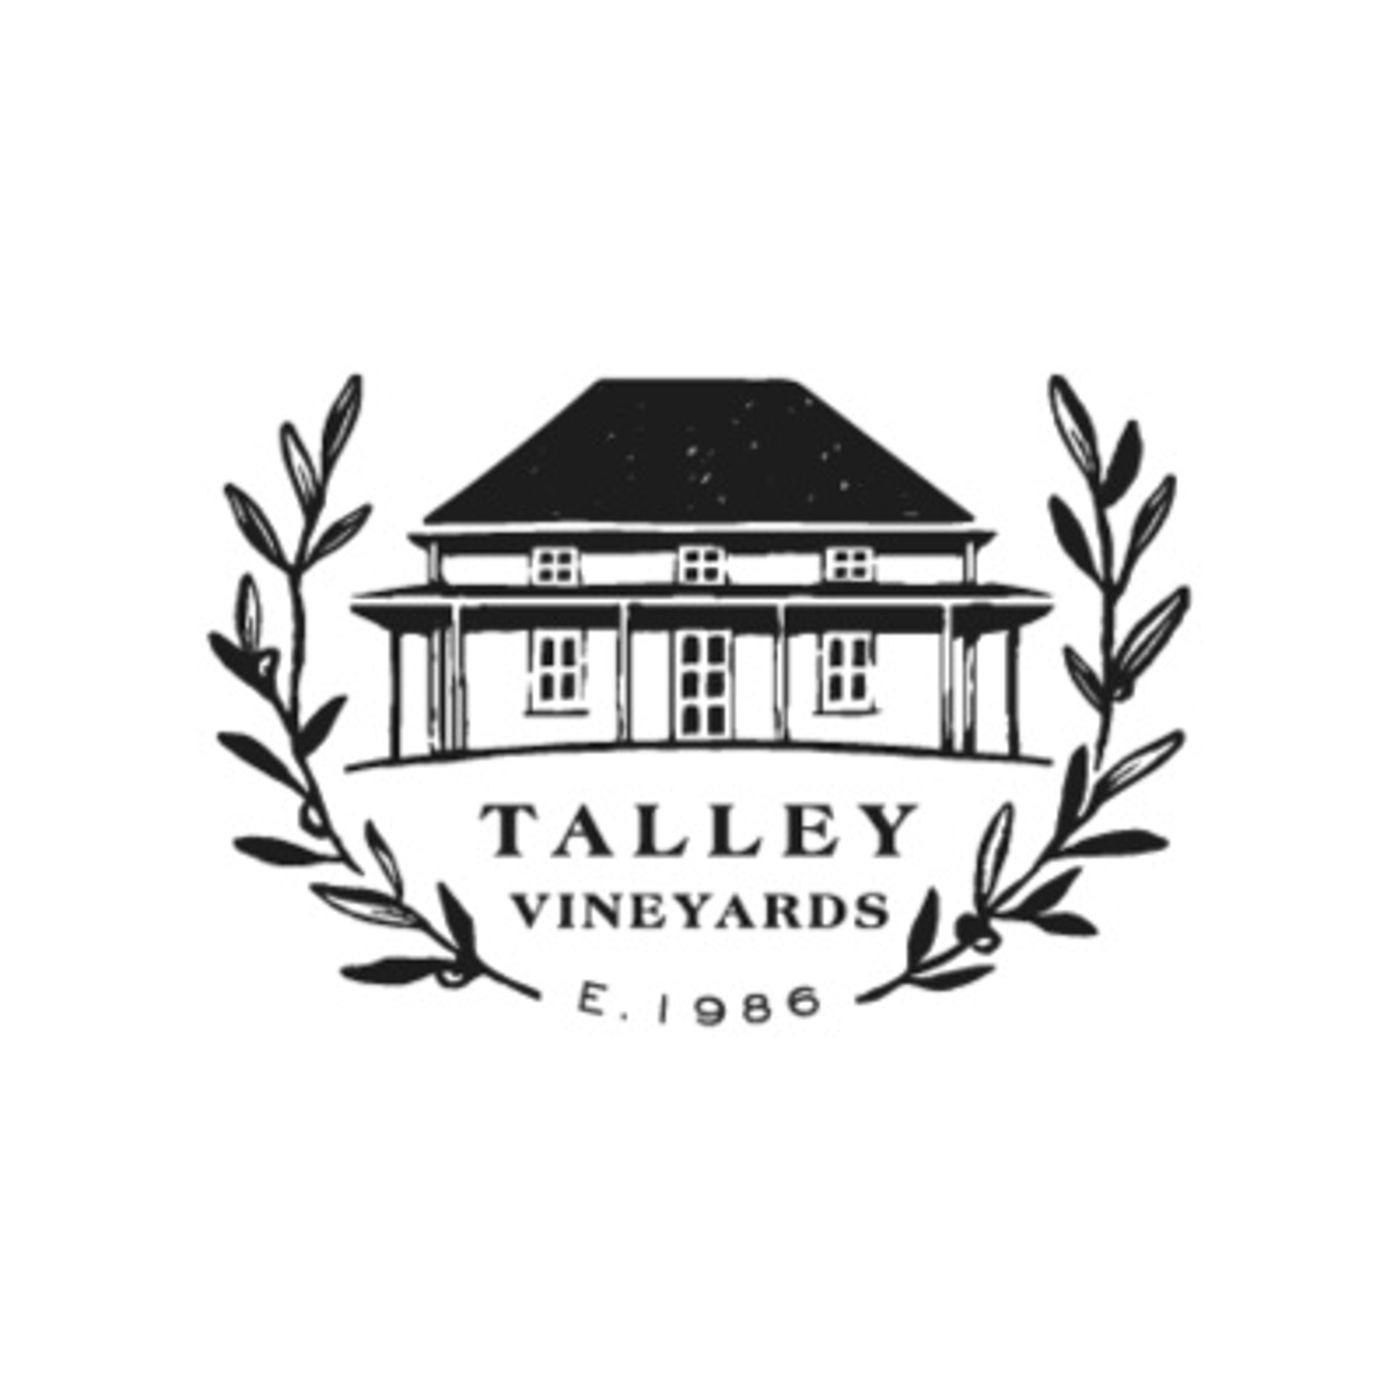 Talley Vineyards - Eric Johnson